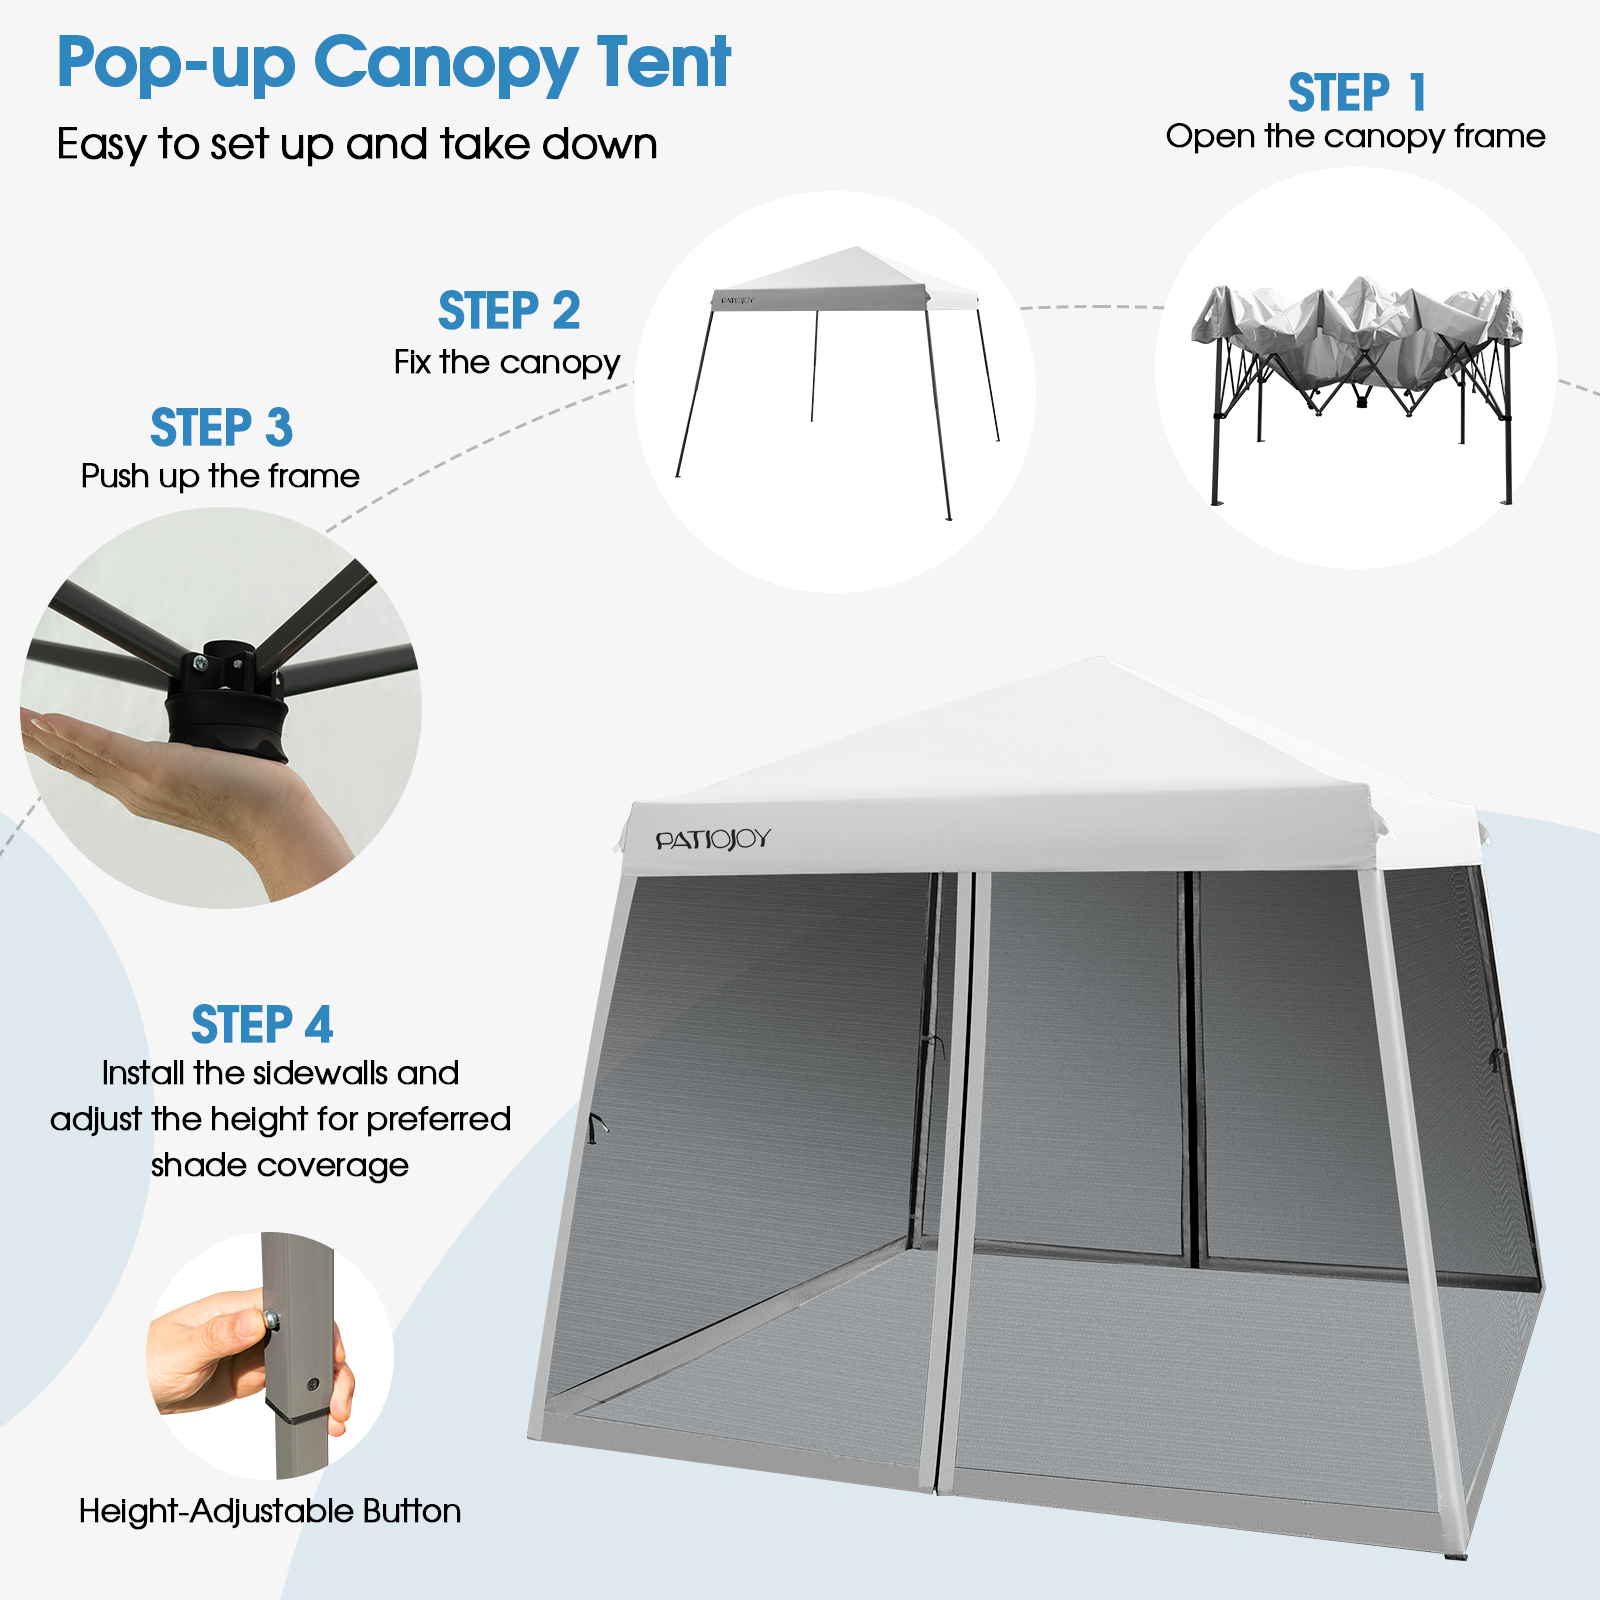 Slanted_Leg_Canopy_Tent-6-2.jpg